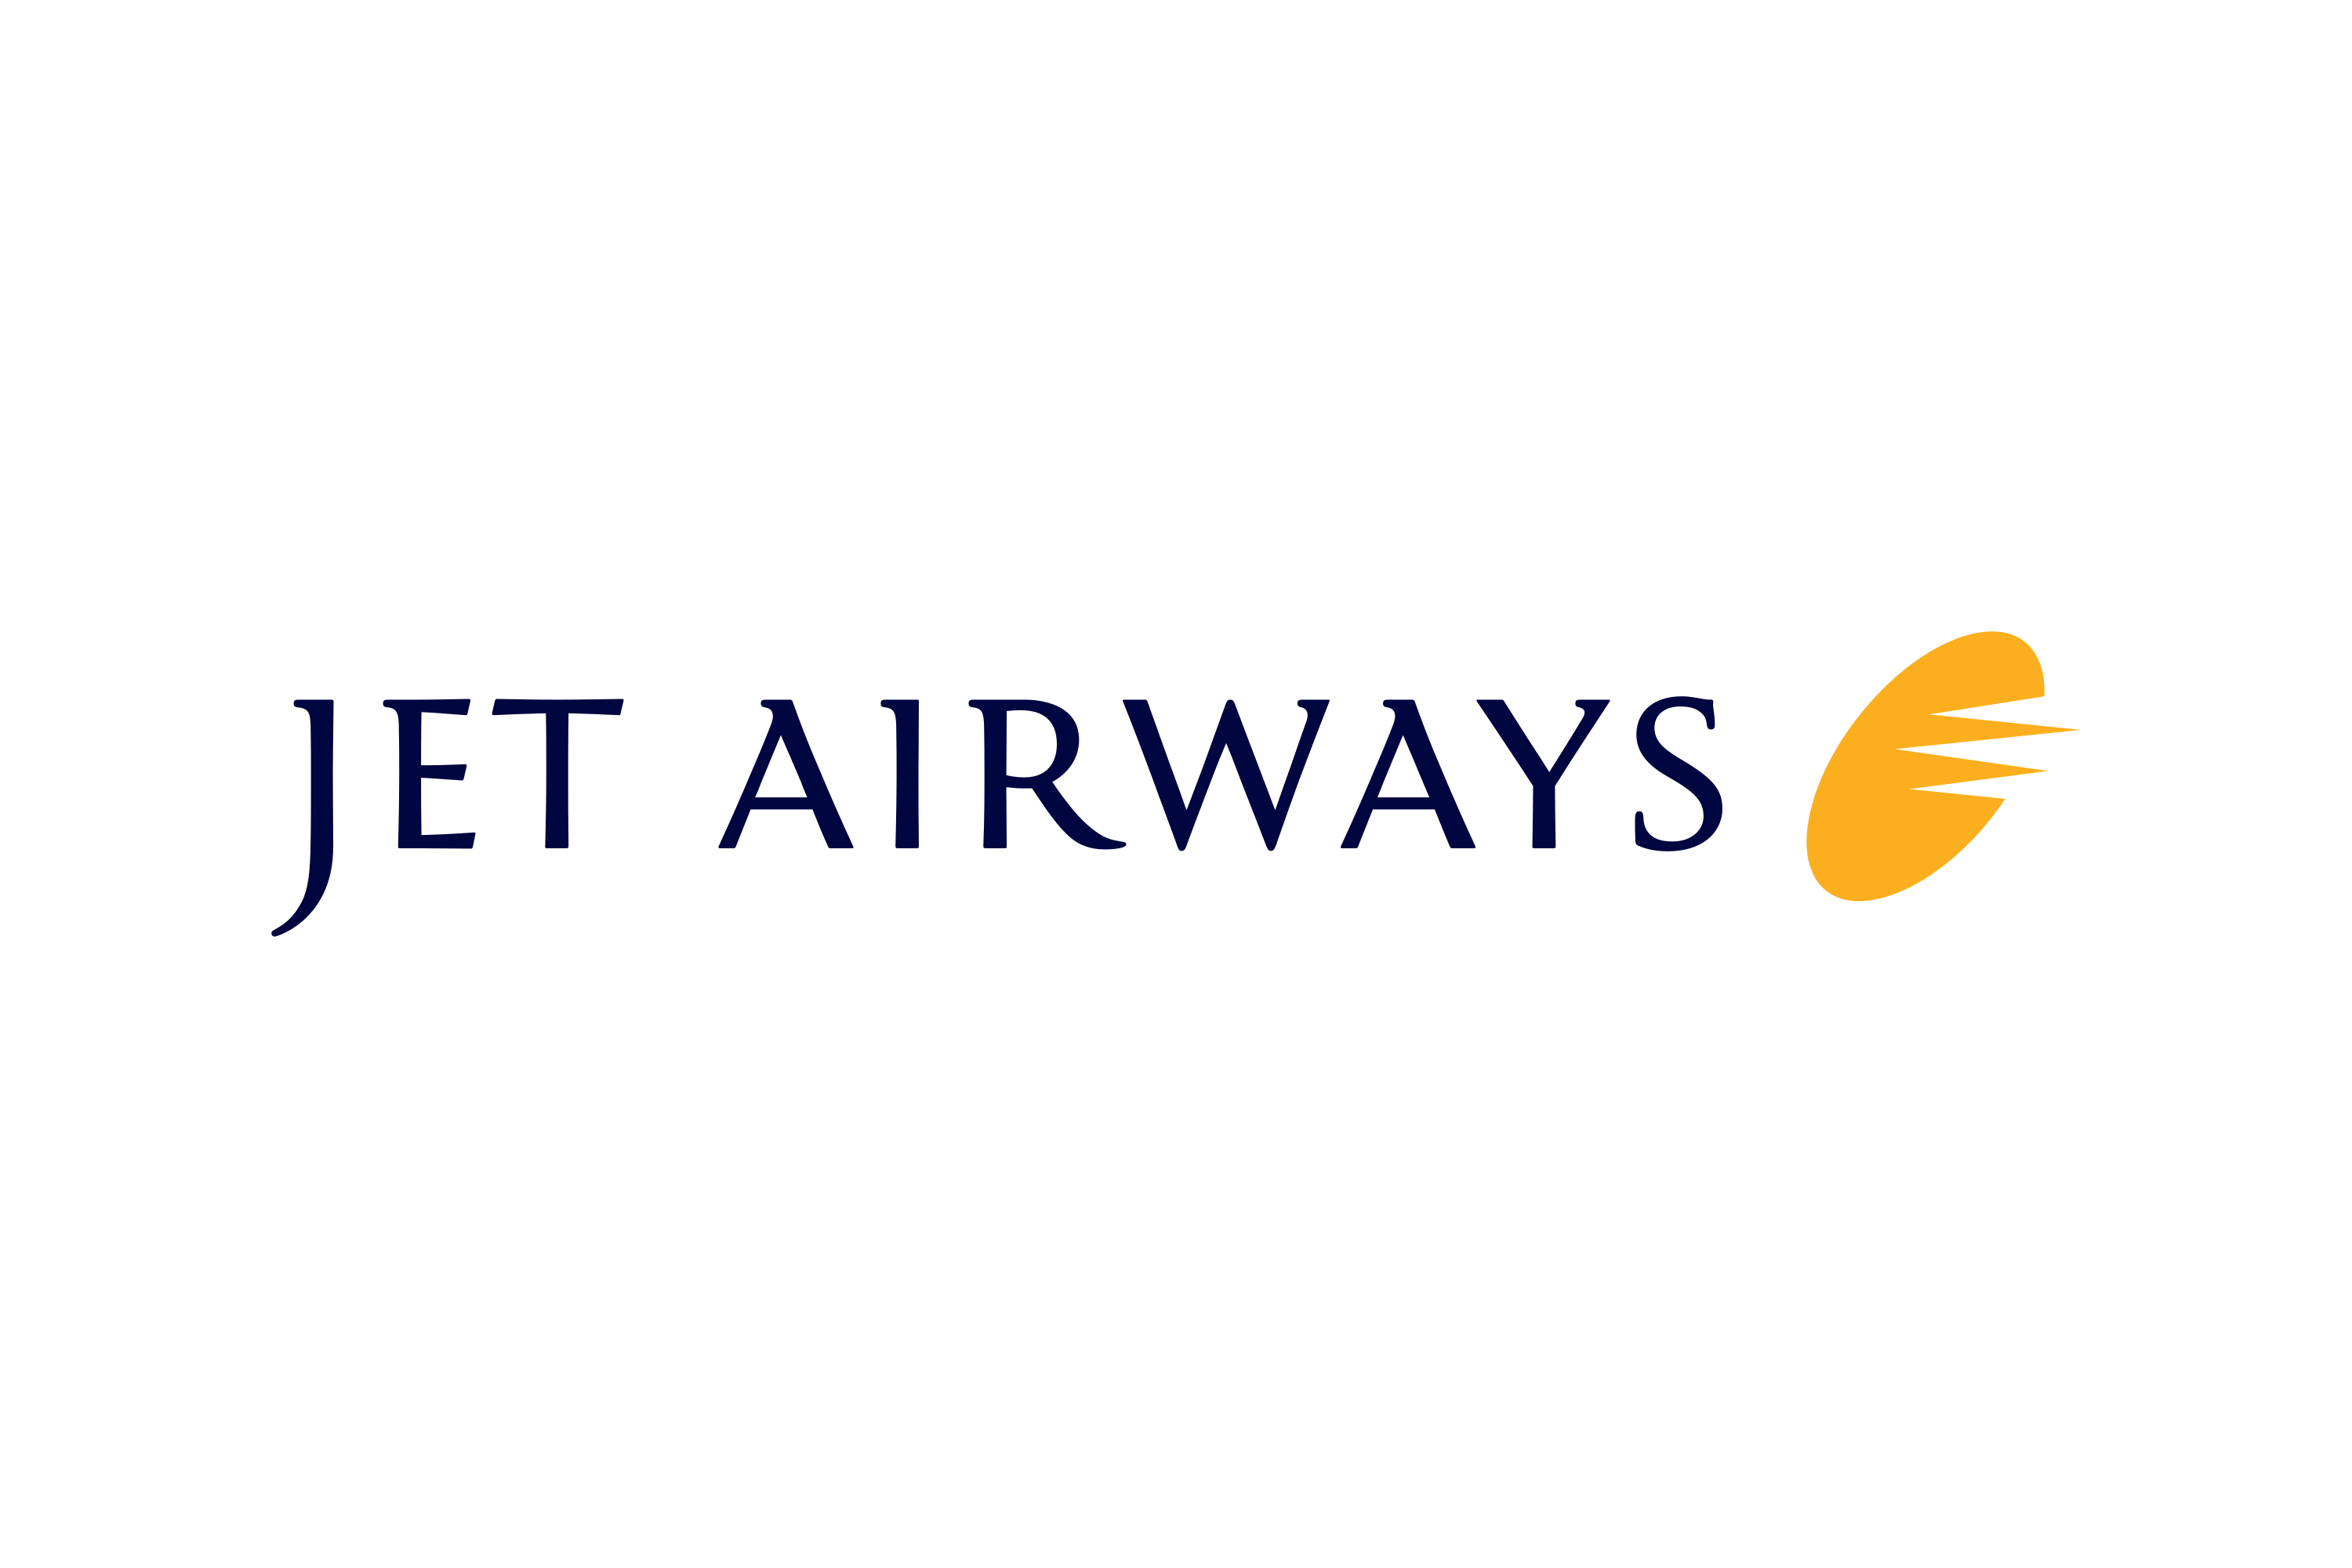 Download Jet Airways Logo in SVG Vector or PNG File Format - Logo.wine